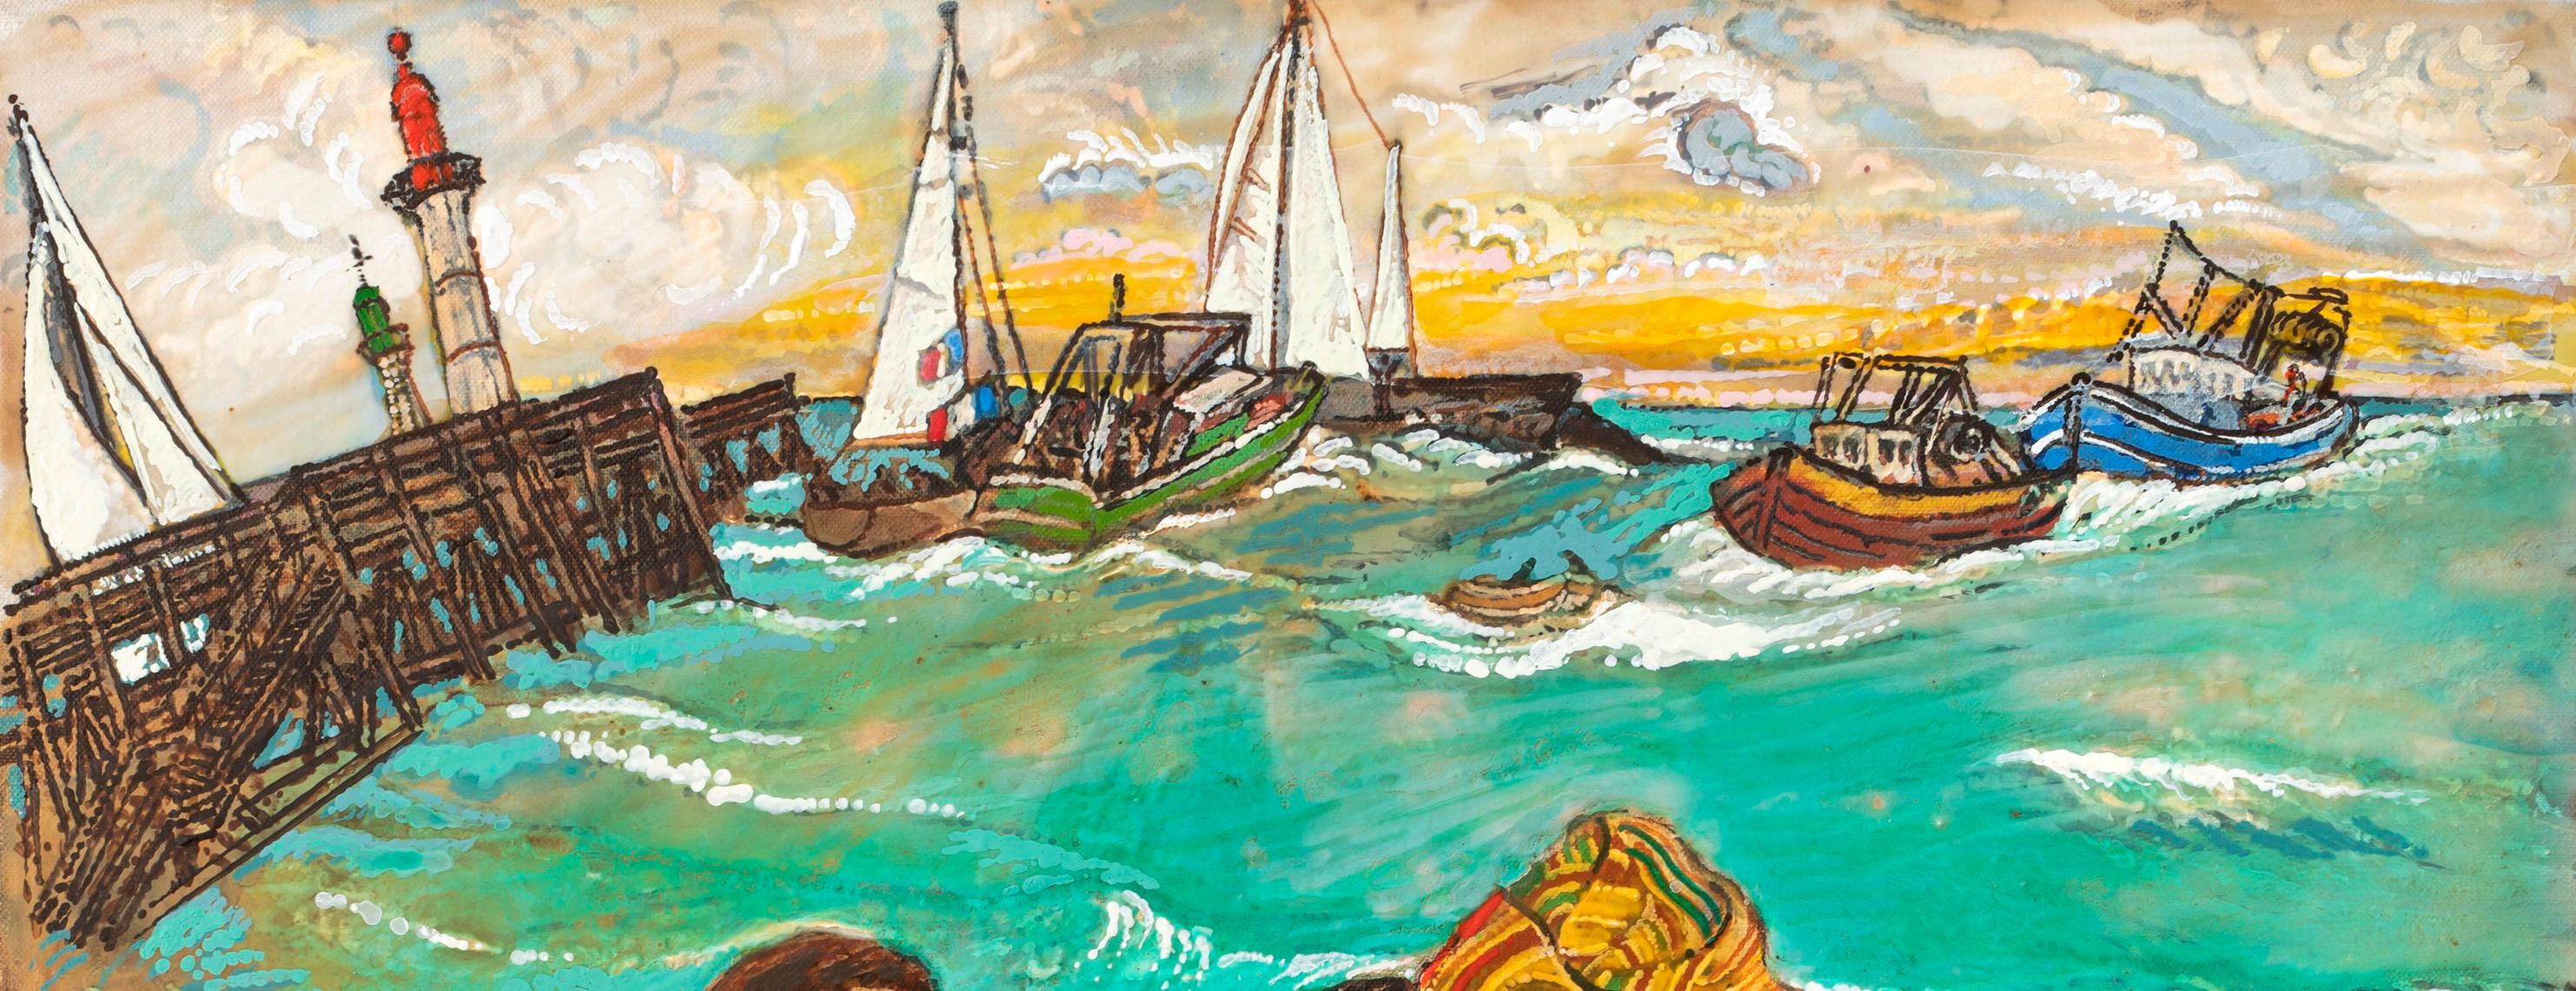 Mermaid Moreno Pincas Contemporary art oil painting colour fish portrait sea  For Sale 2